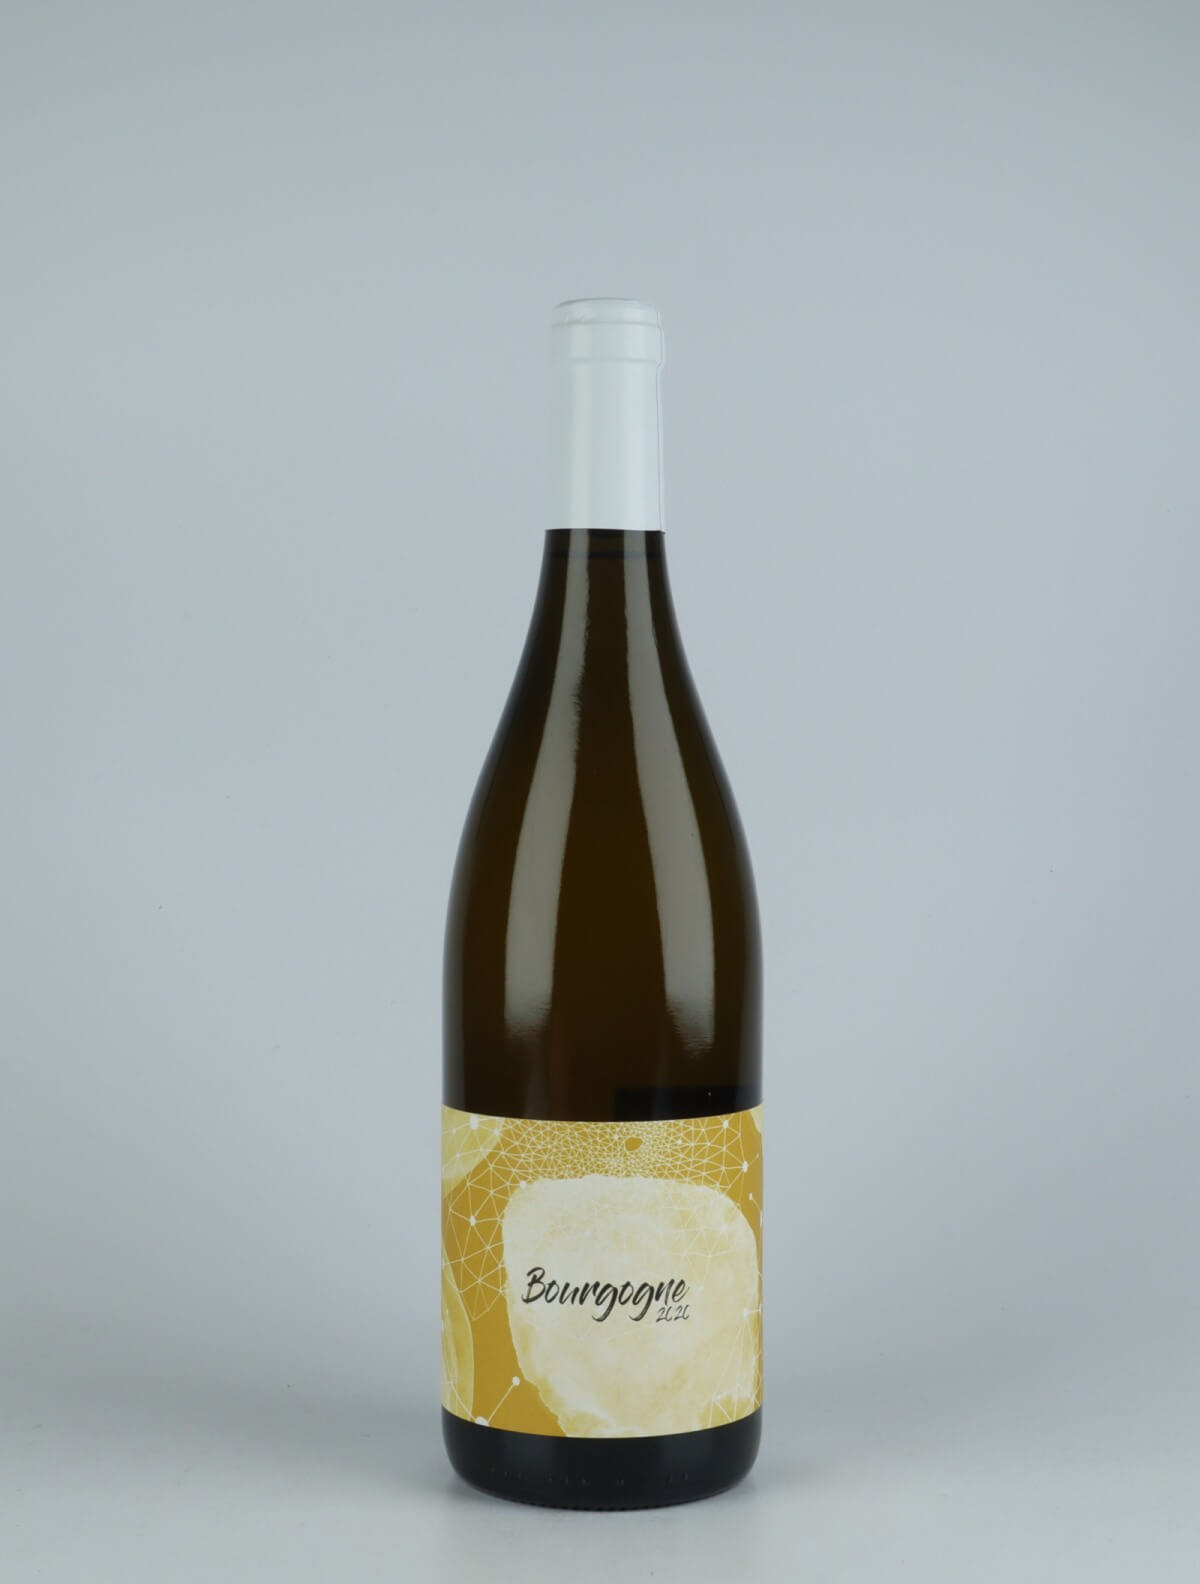 A bottle 2020 Bourgogne Blanc White wine from Domaine Didon, Burgundy in France